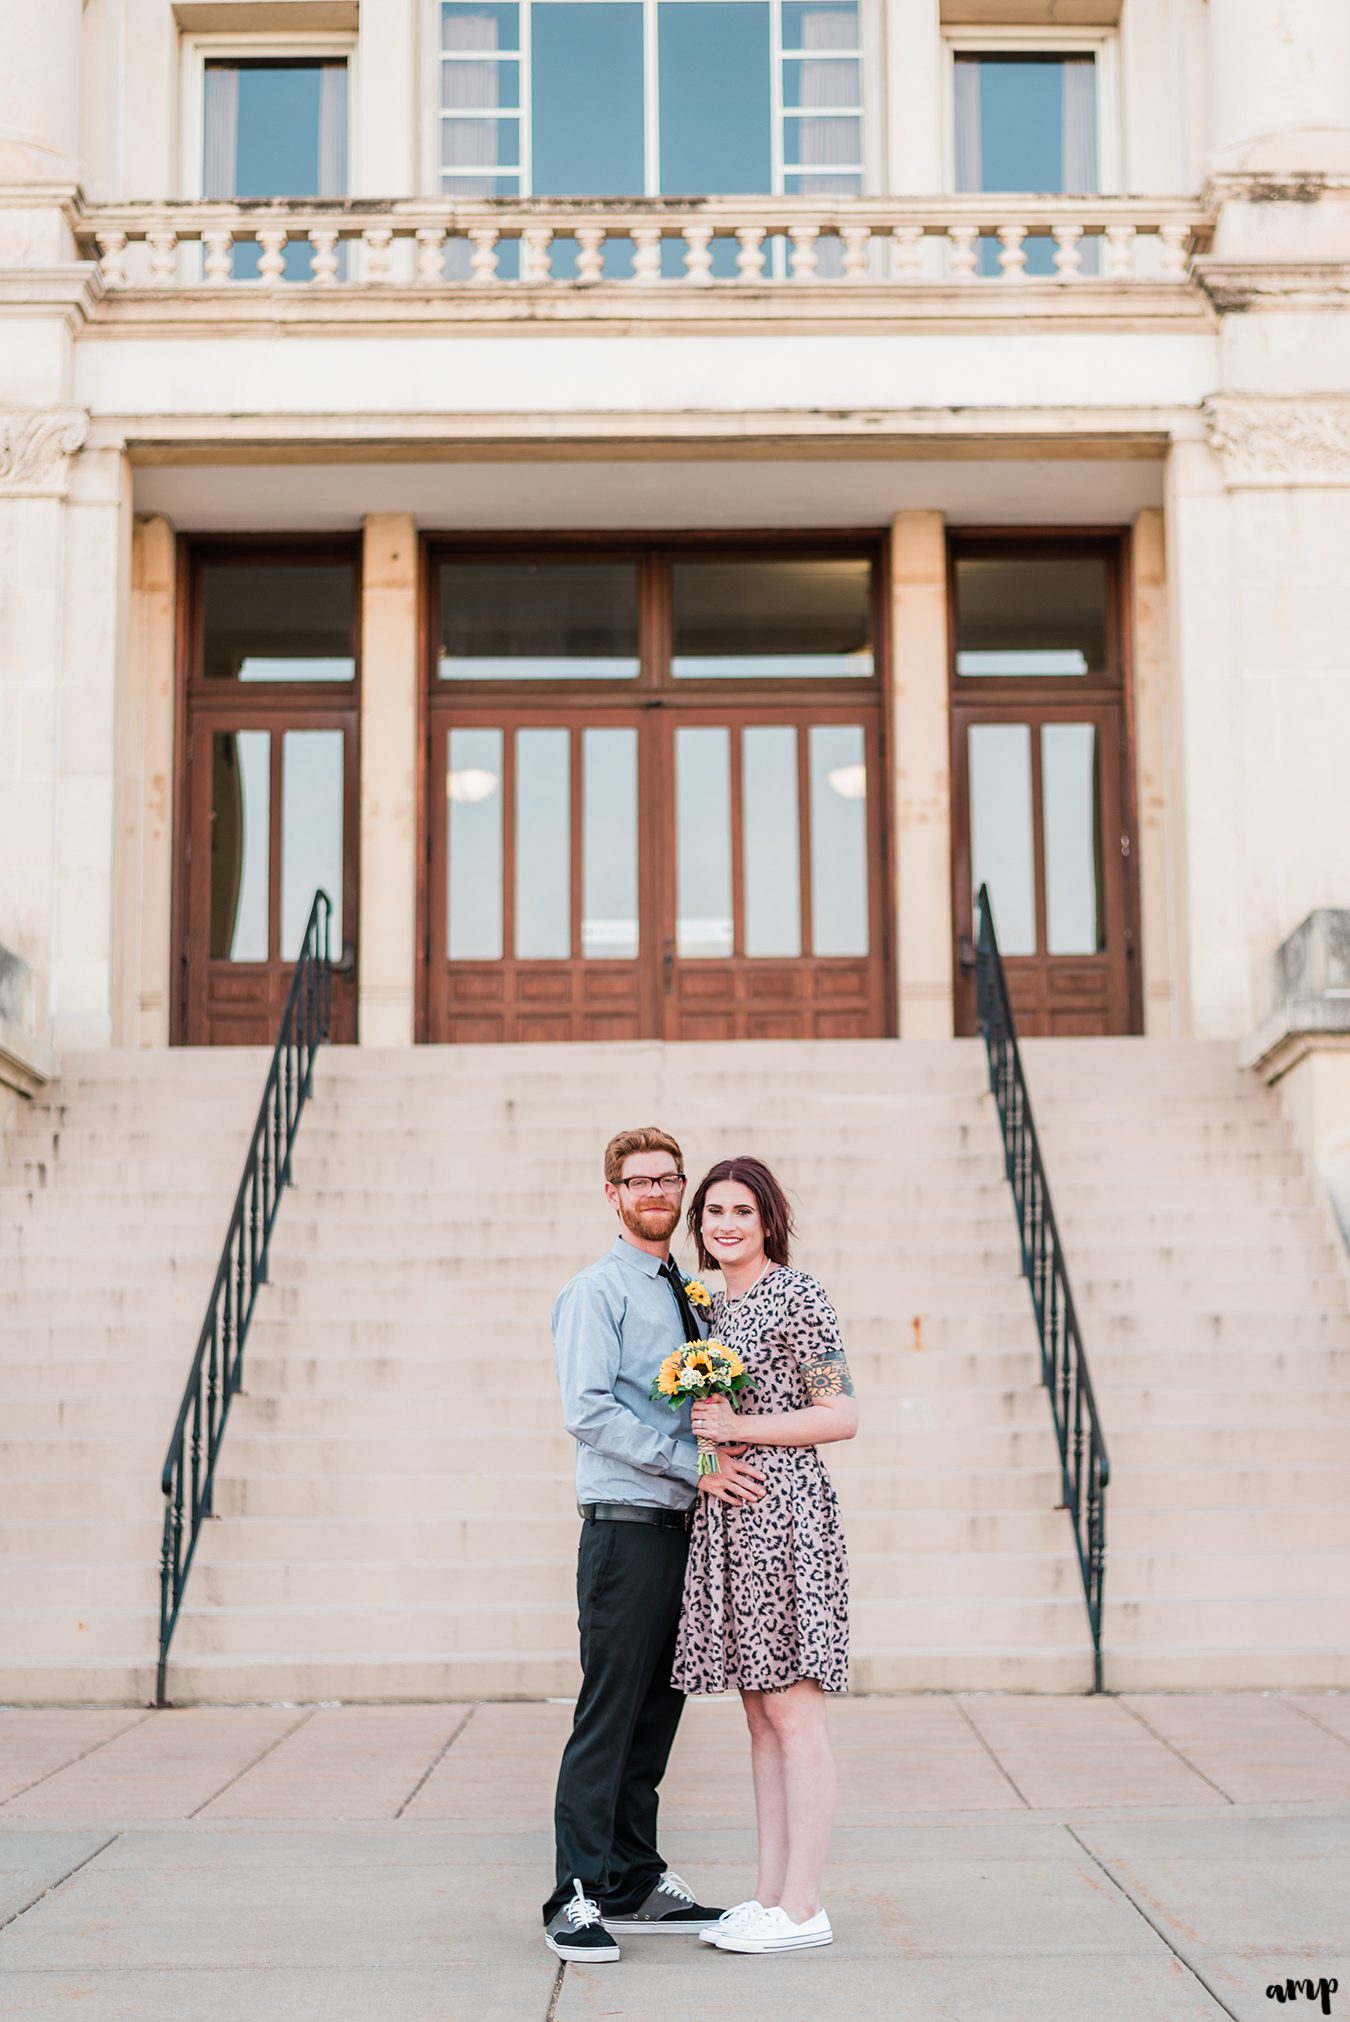 Ben & Courtnee's Wichita Courthouse Wedding | amanda.matilda.photography